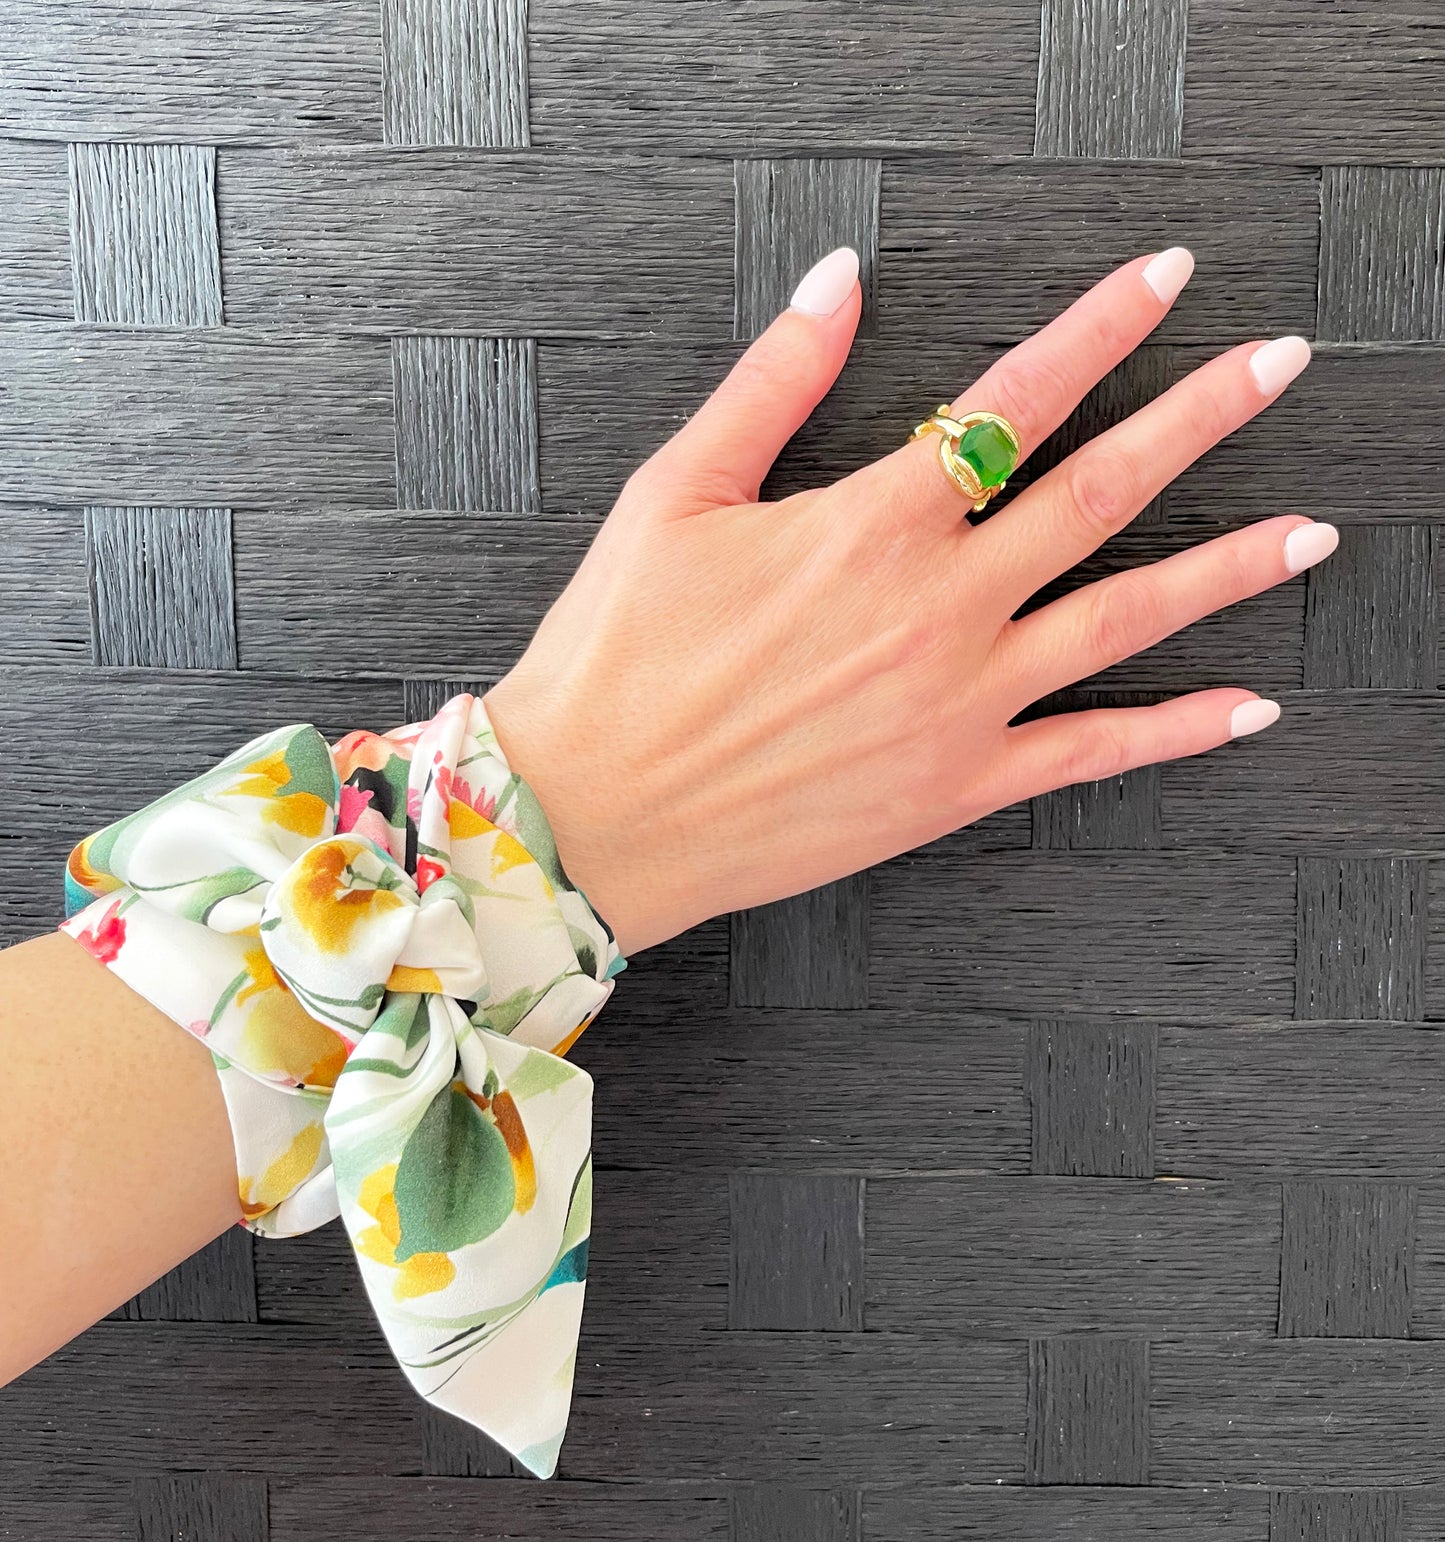 Thin floral scarf wrapped around wrist, worn as a bracelet.